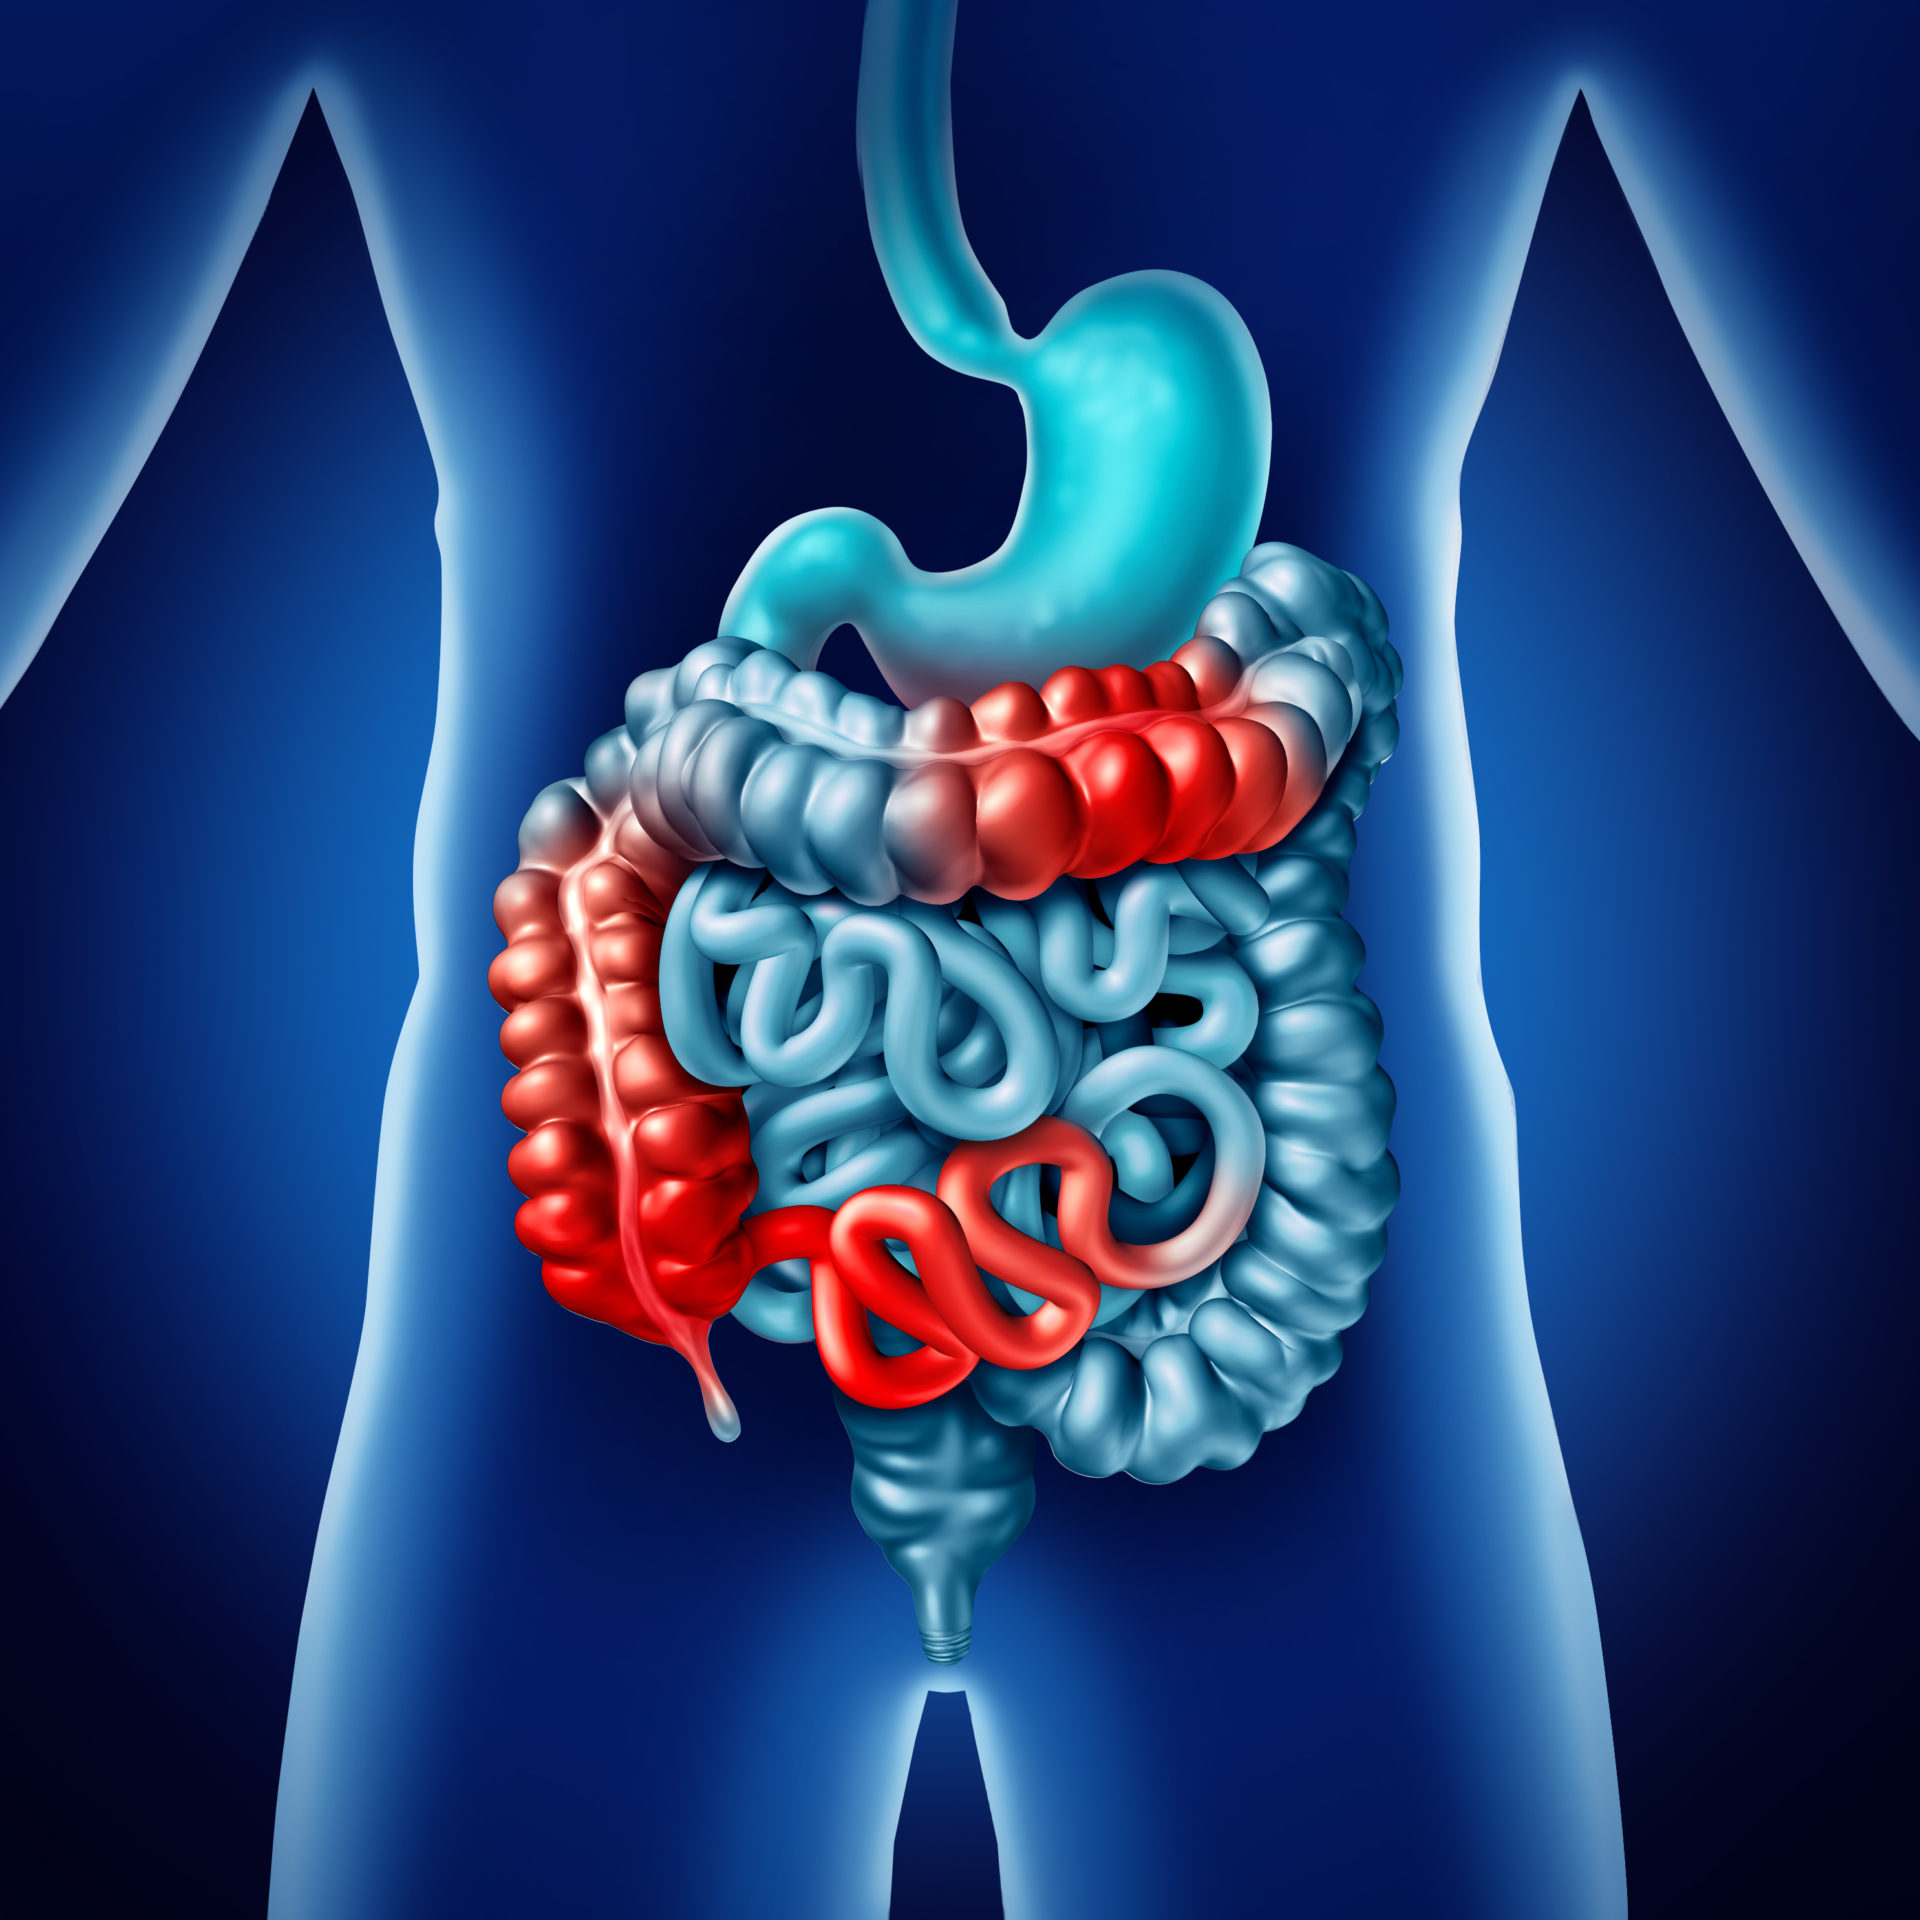 Intestinal Obstruction - Factors, Types and Treatment